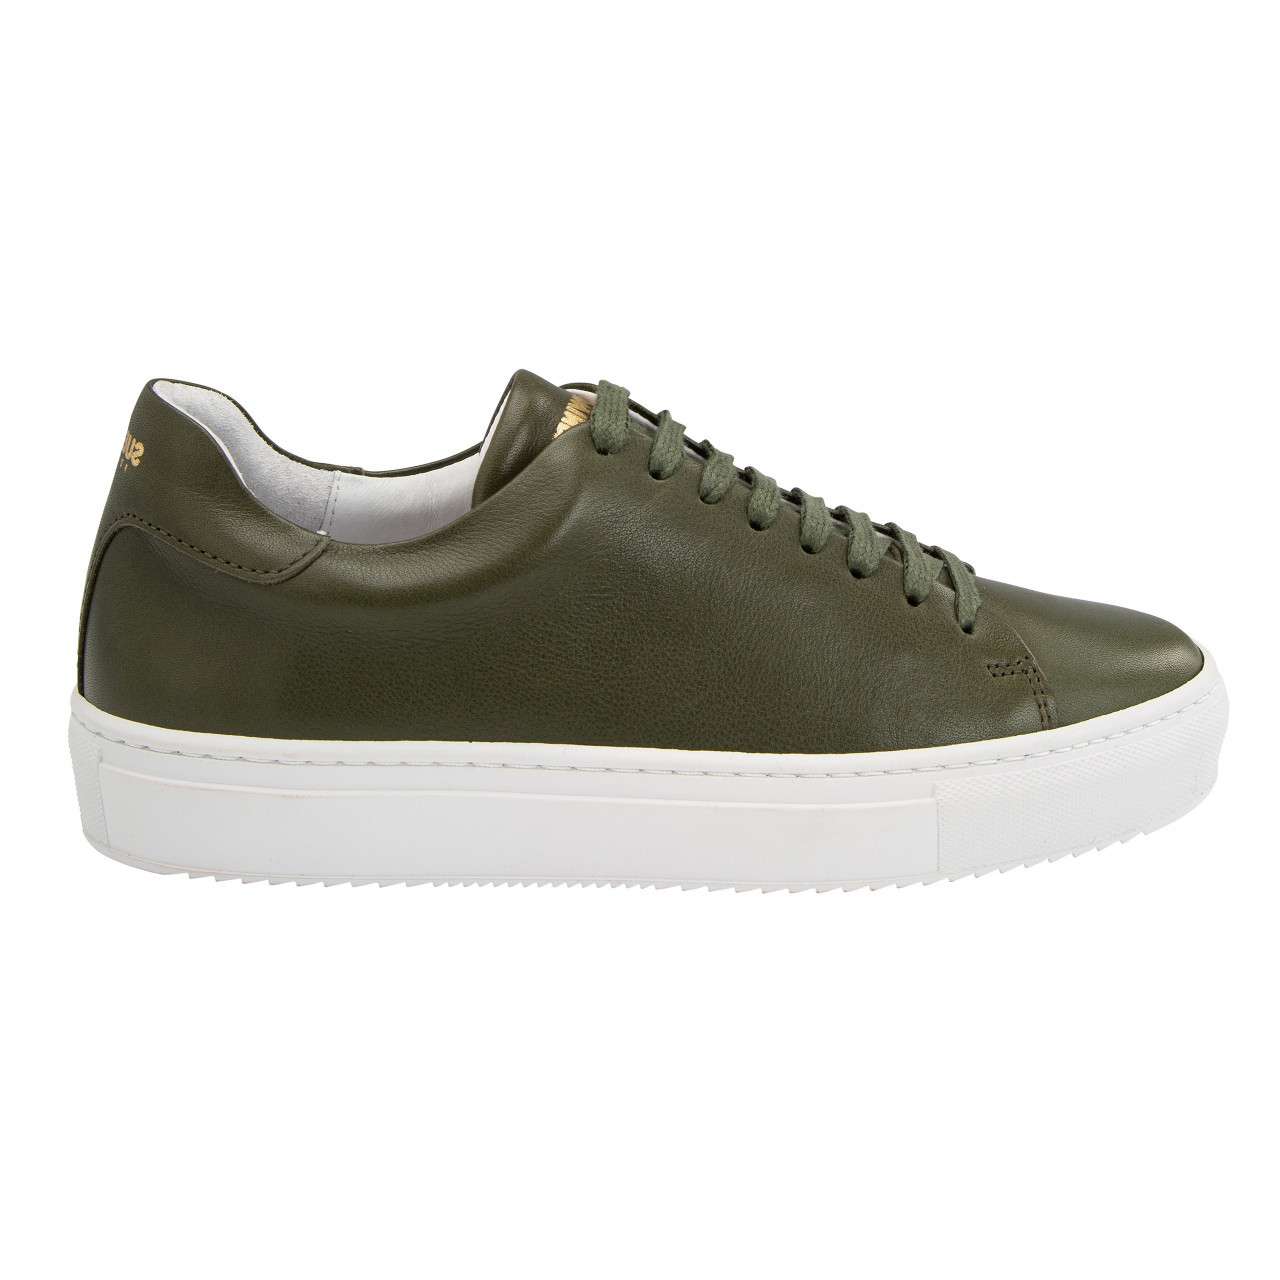 Suedwind-Ashton-Leather-Leder-Sneaker-Schuhe-Boots-Green-Gruen-10170028-01_gespiegelt_1280x1280